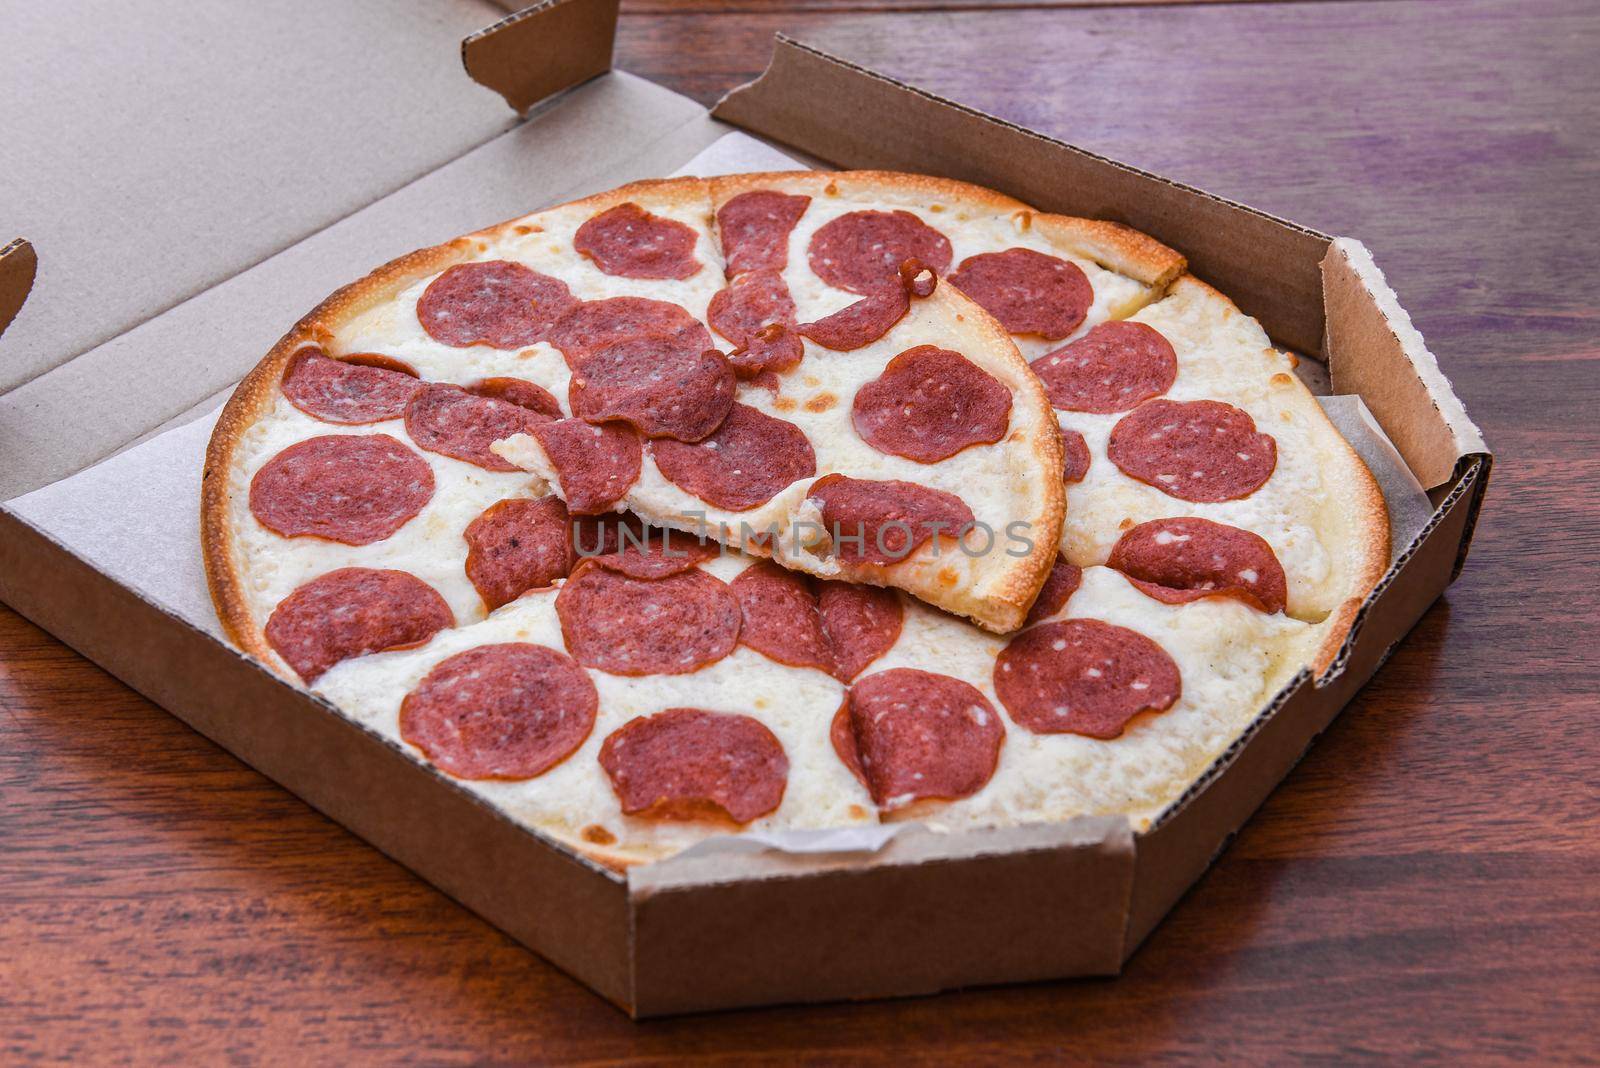 Pepperoni Pizza in open carton box on wooden table, closeup.